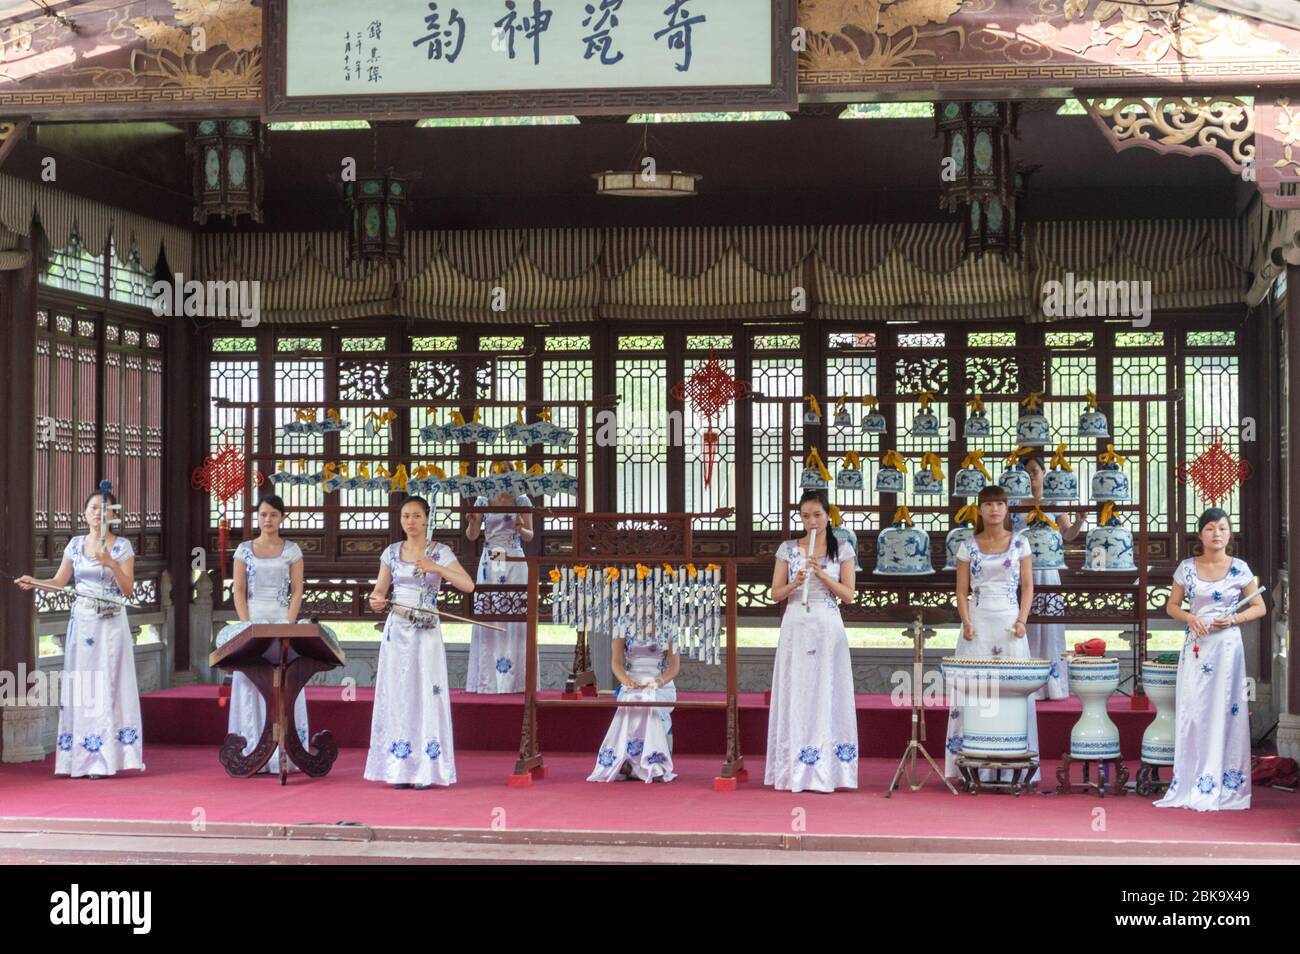 Jingdezhen, Jiangxi province / China - May 29, 2014: Female music ensemble performing traditional Chinese music on porcelain instruments in Jingdezhen Stock Photo